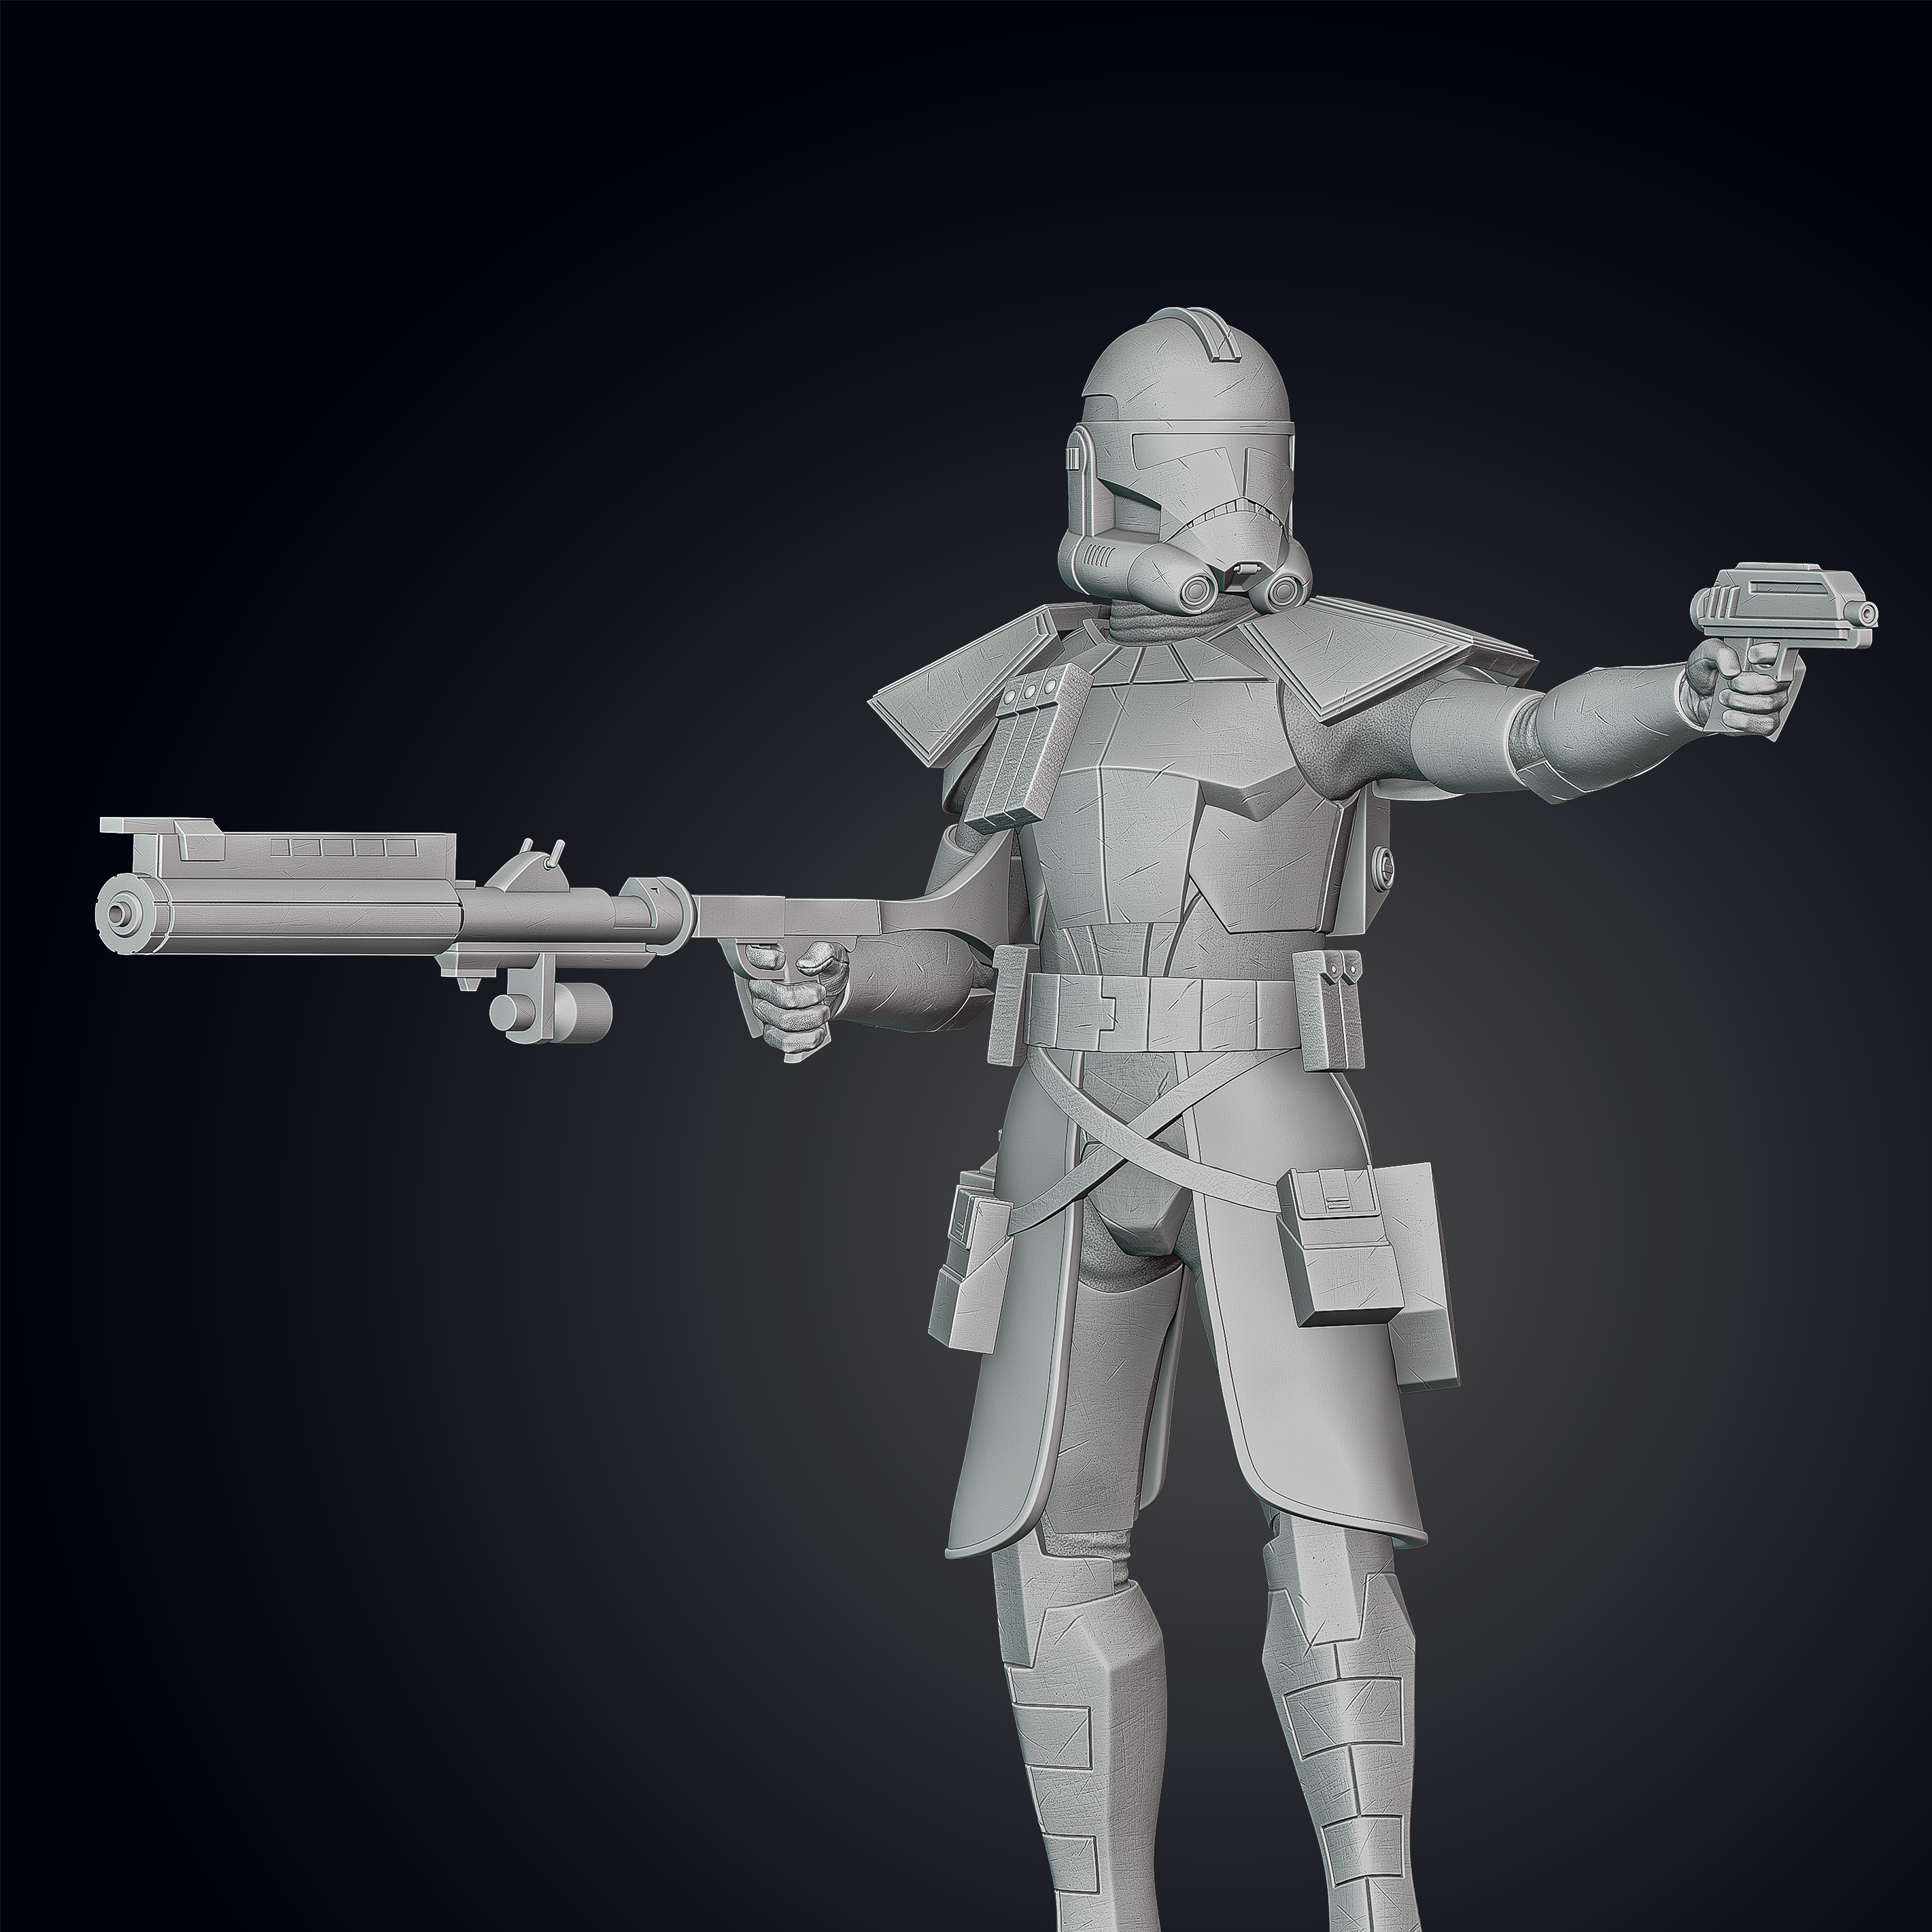 Animated ARC Trooper Figurine - Pose 4 - 3D Print Files